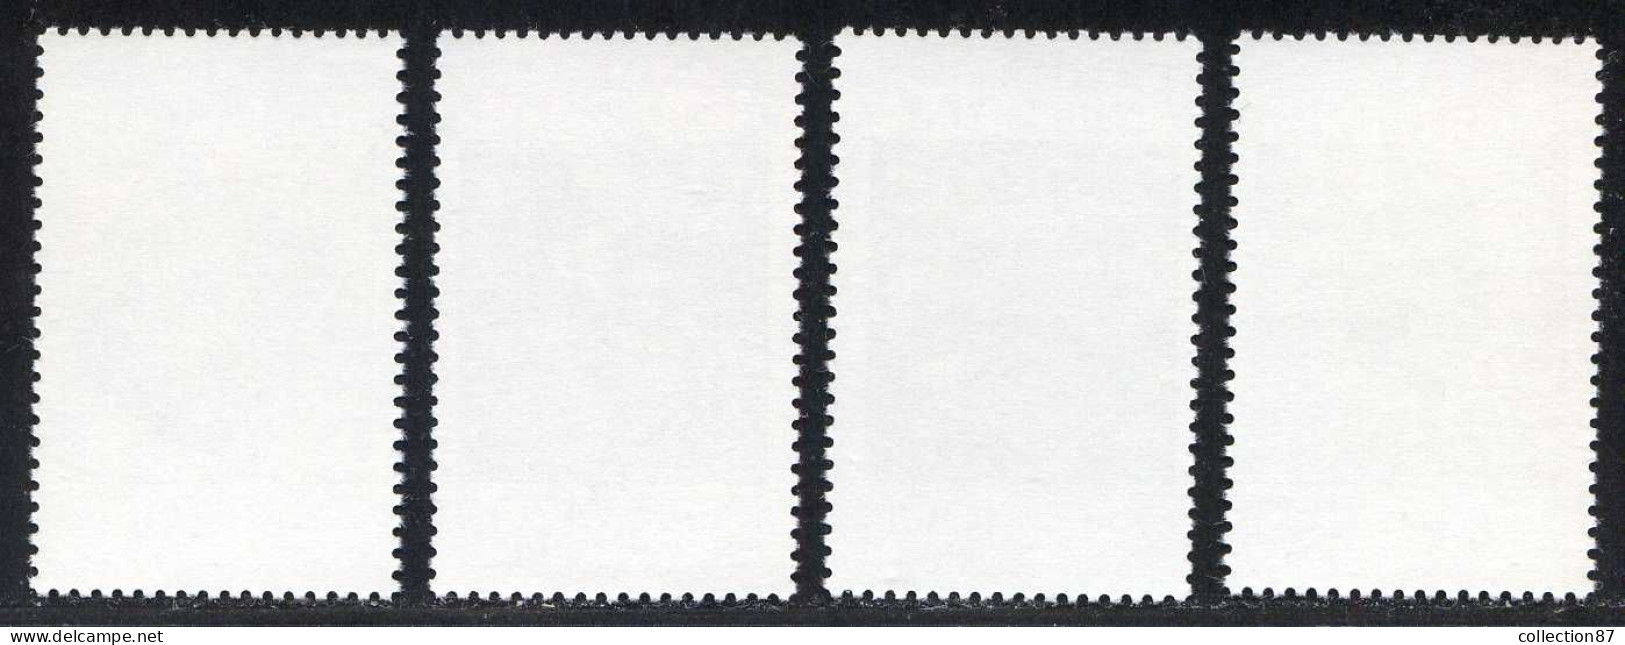 REF093 > TURQUIE < Yv N° 2498 à 2501 * *  -  MNH * * -- Turkey -- Poignard Bouclier Verre Encensoir - Unused Stamps